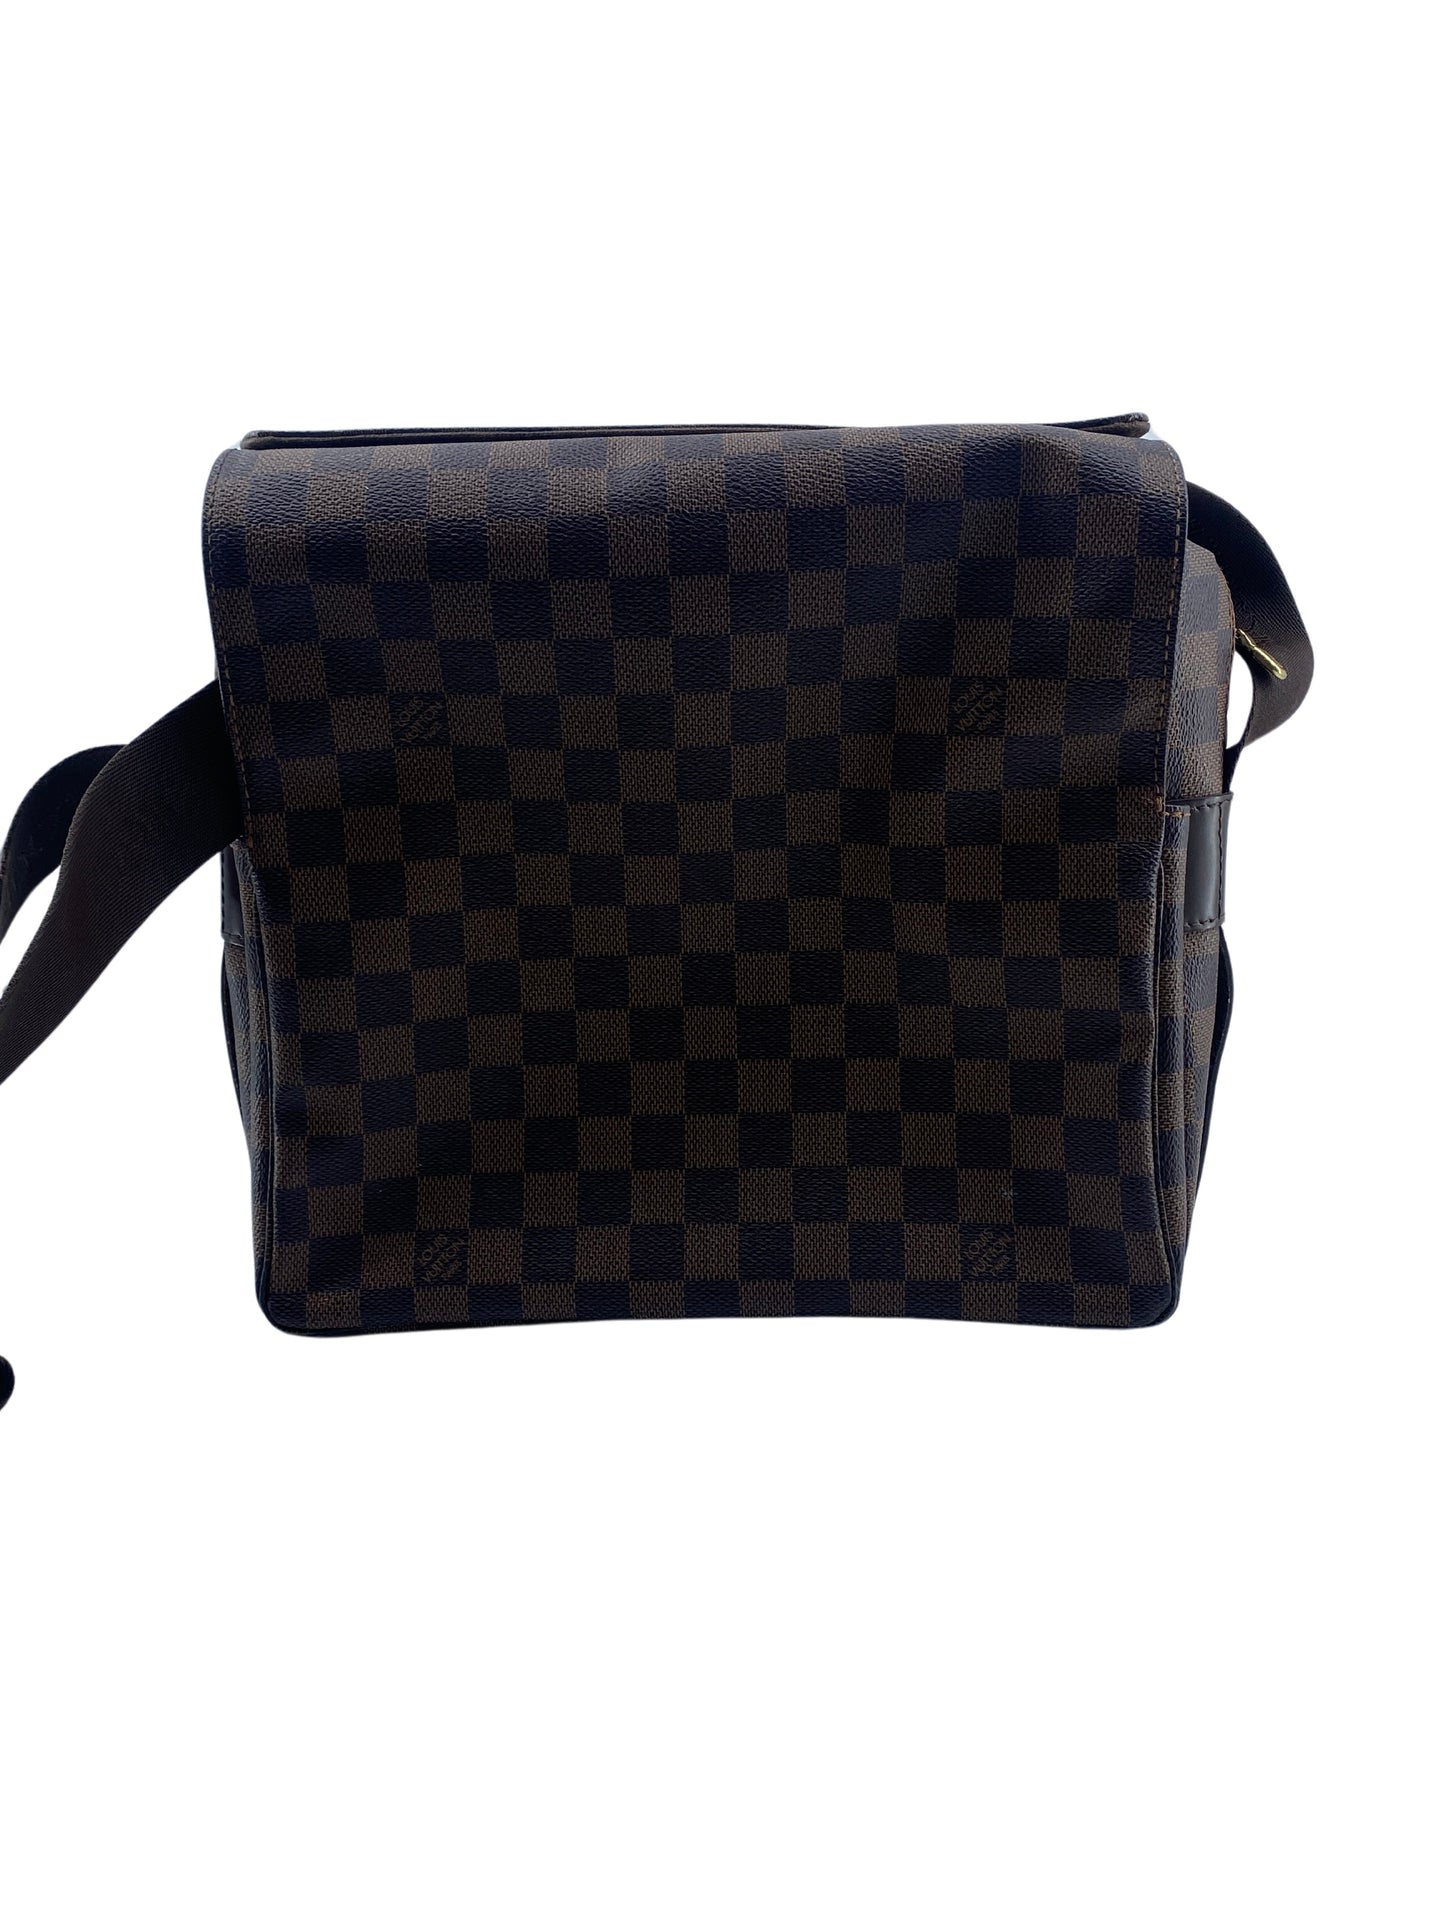 Louis Vuitton Naviglio Brown Canvas Shoulder Bag